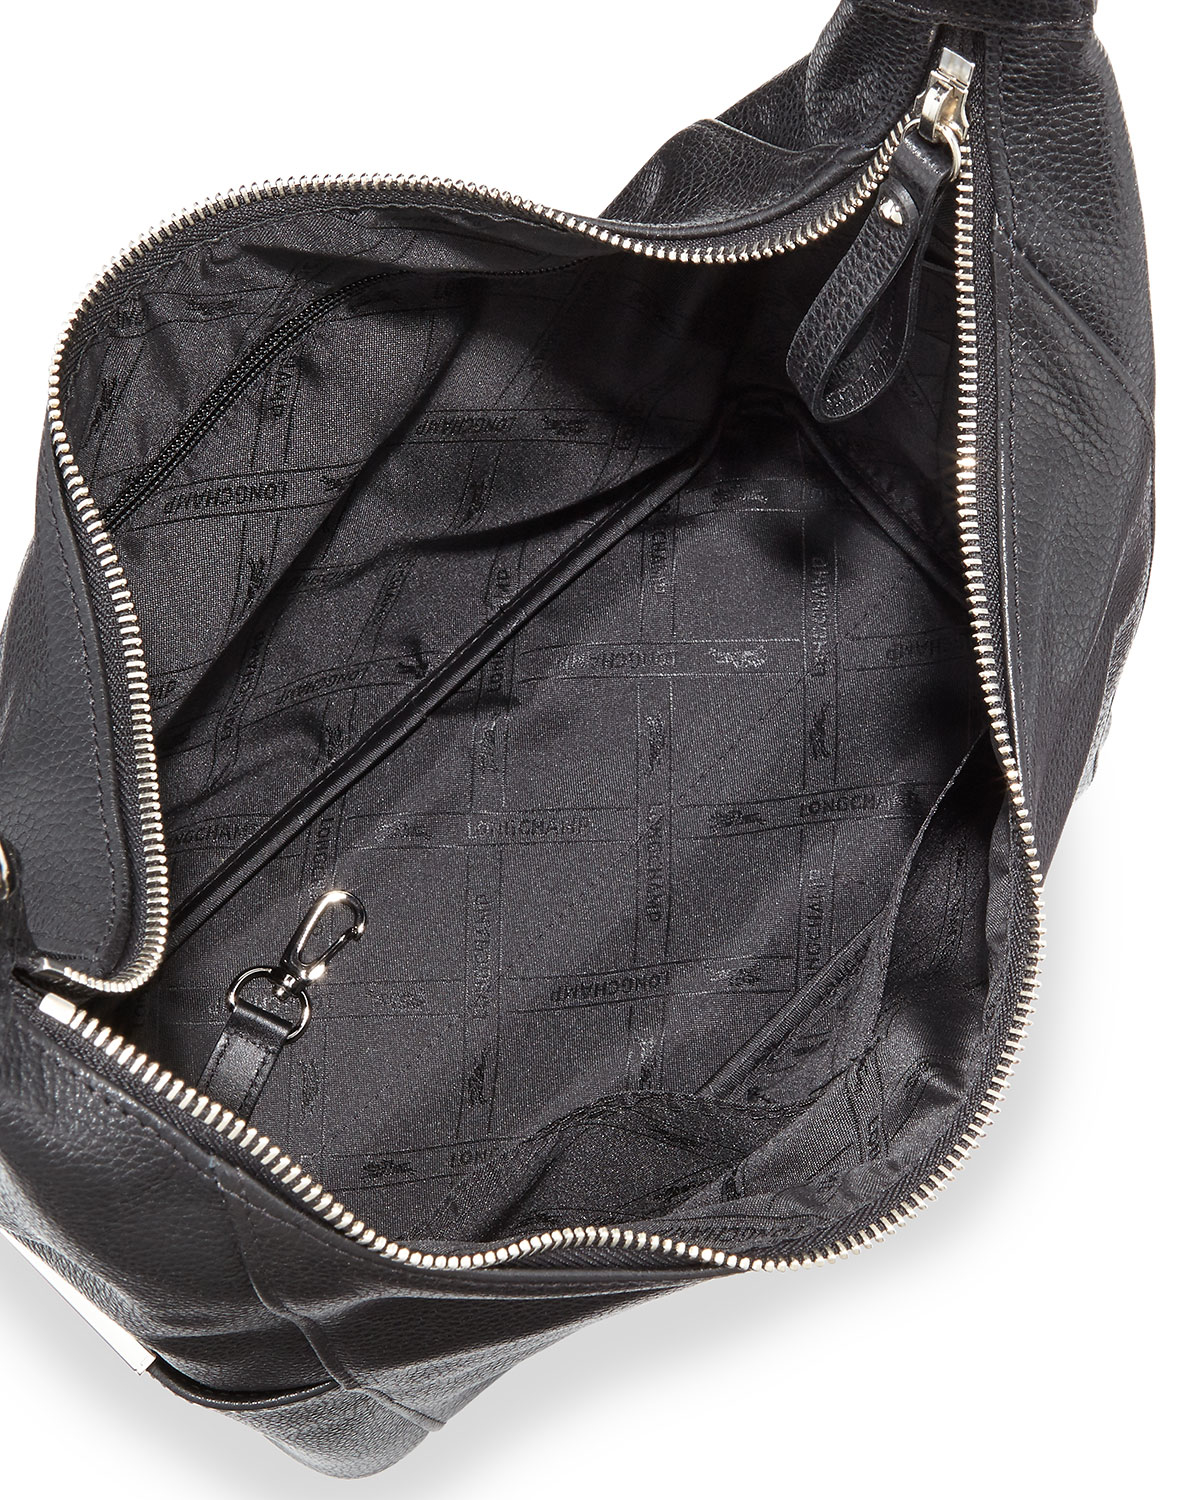 Lyst - Longchamp Le Foulonne Small Hobo Bag in Black